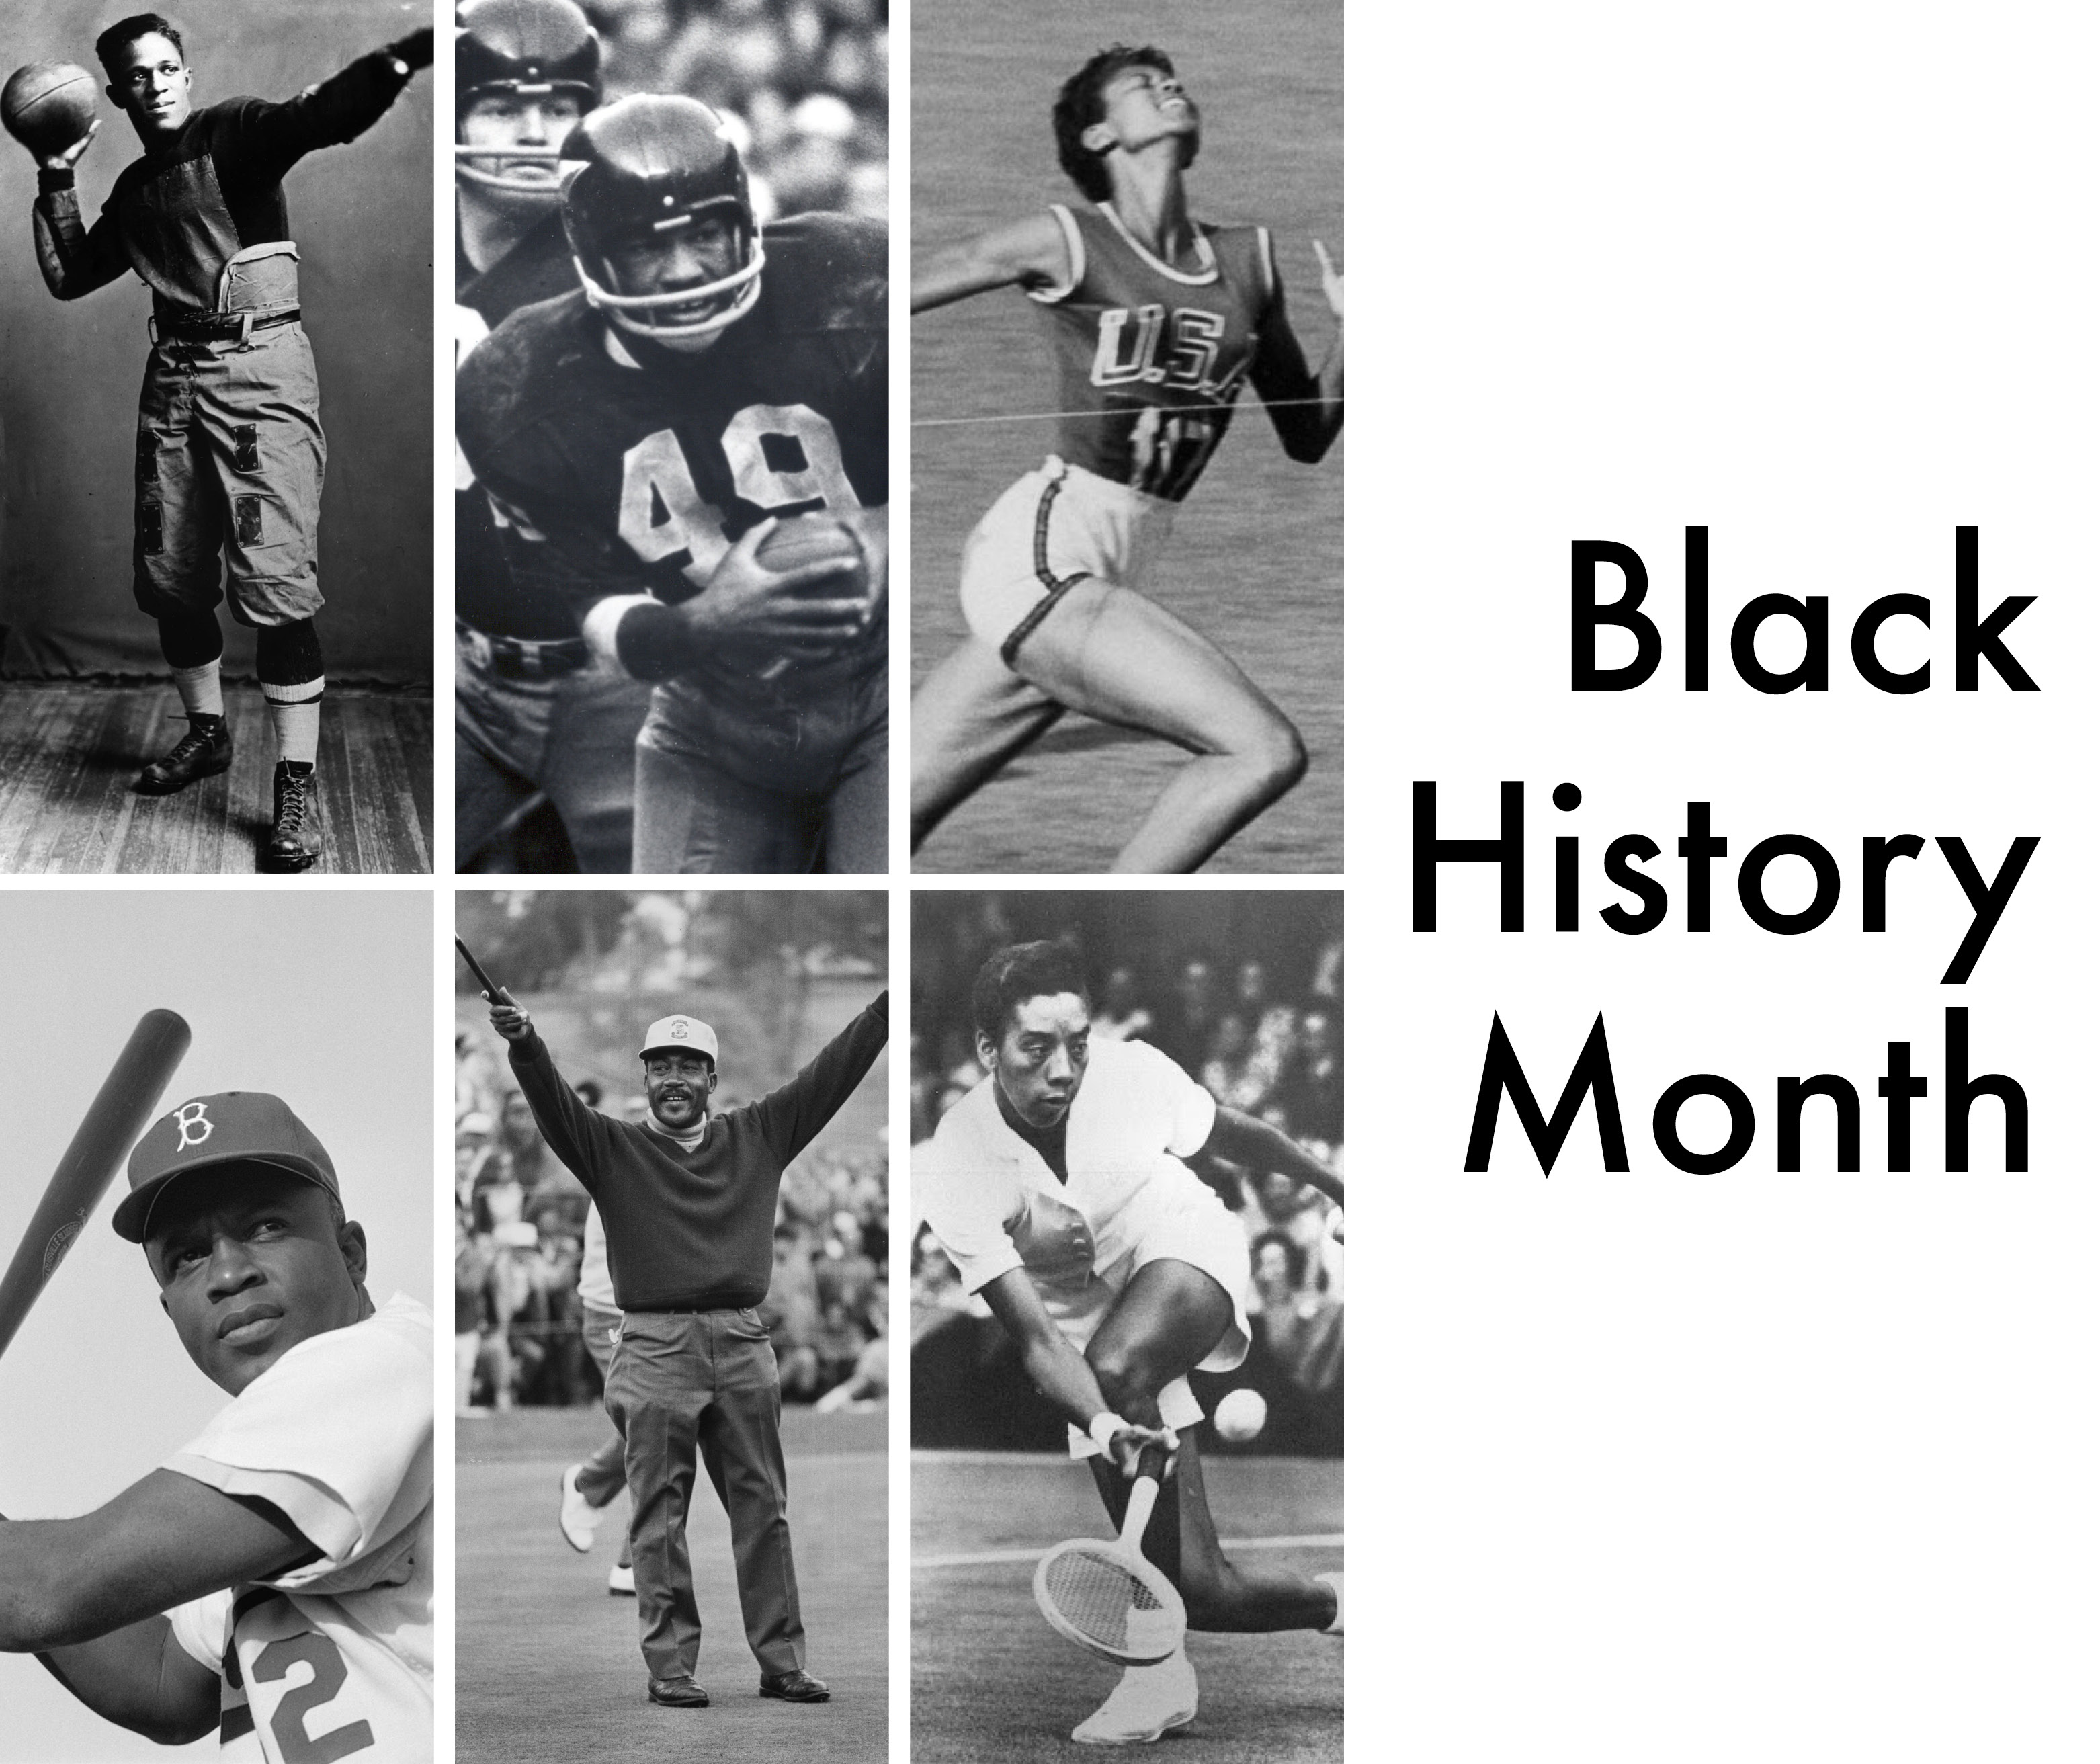 Black History Month x Brooklyn - NetsDaily